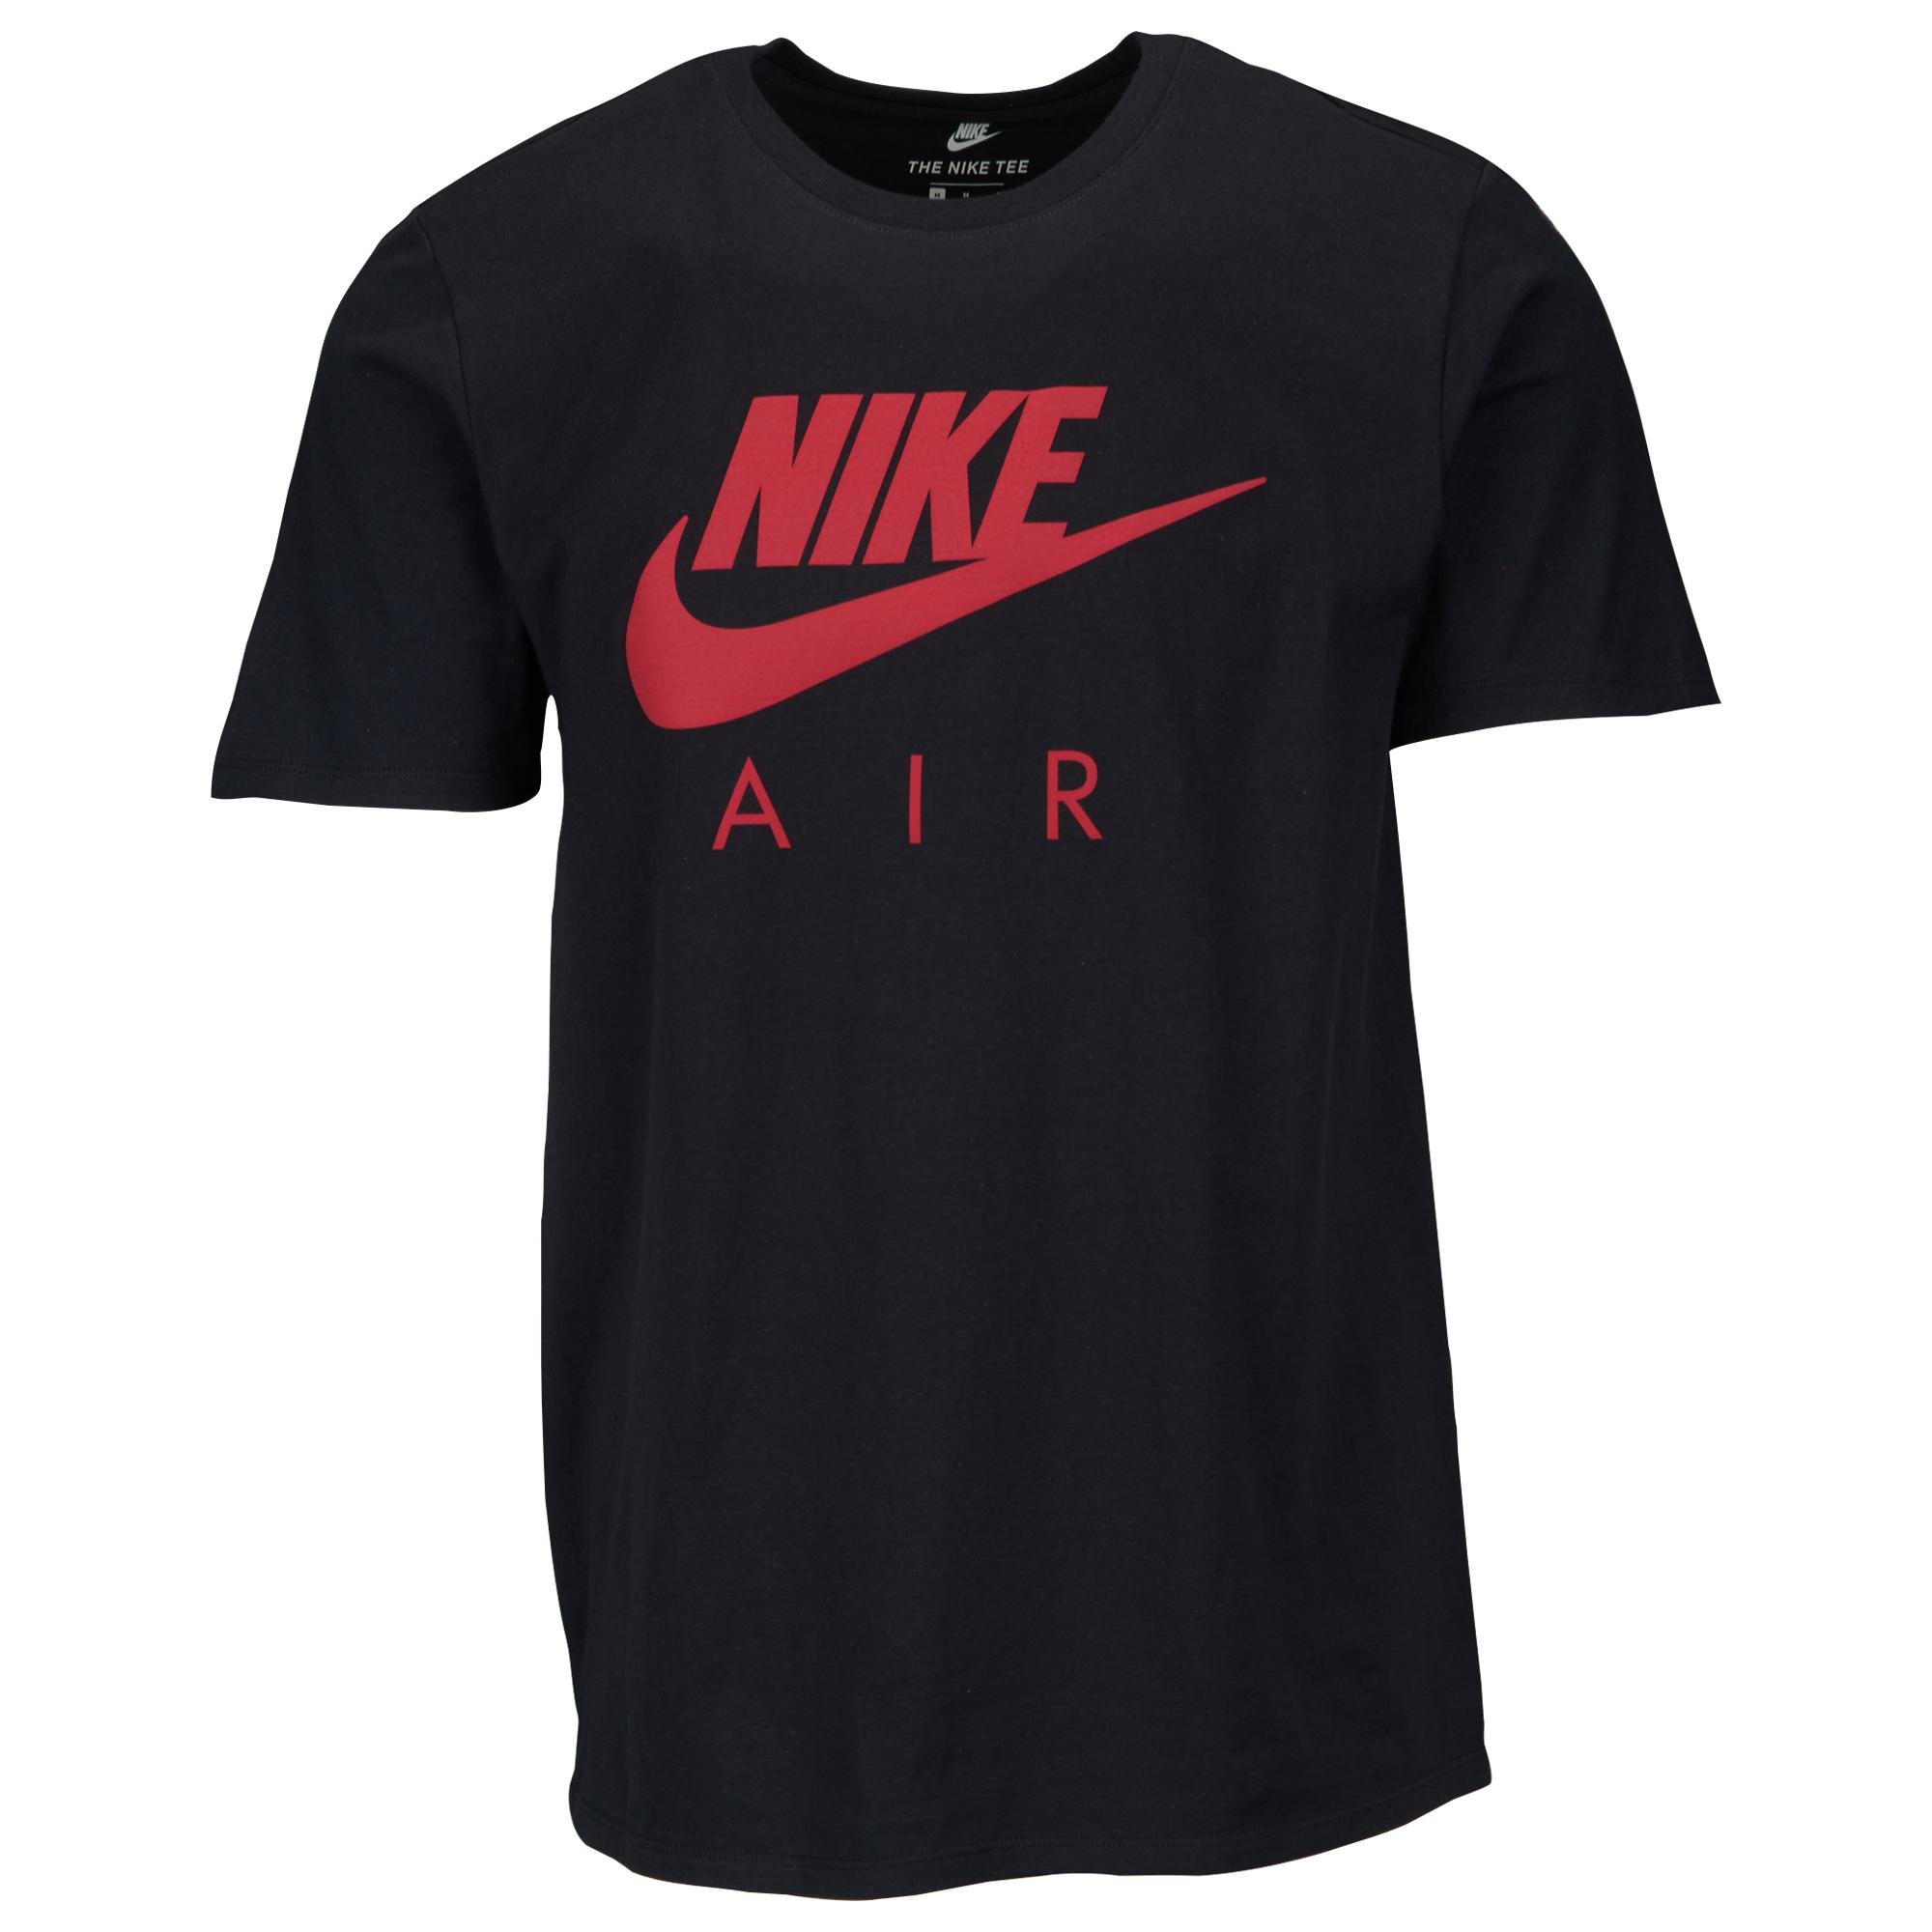 Nike Air T-shirt in Black for Men - Lyst